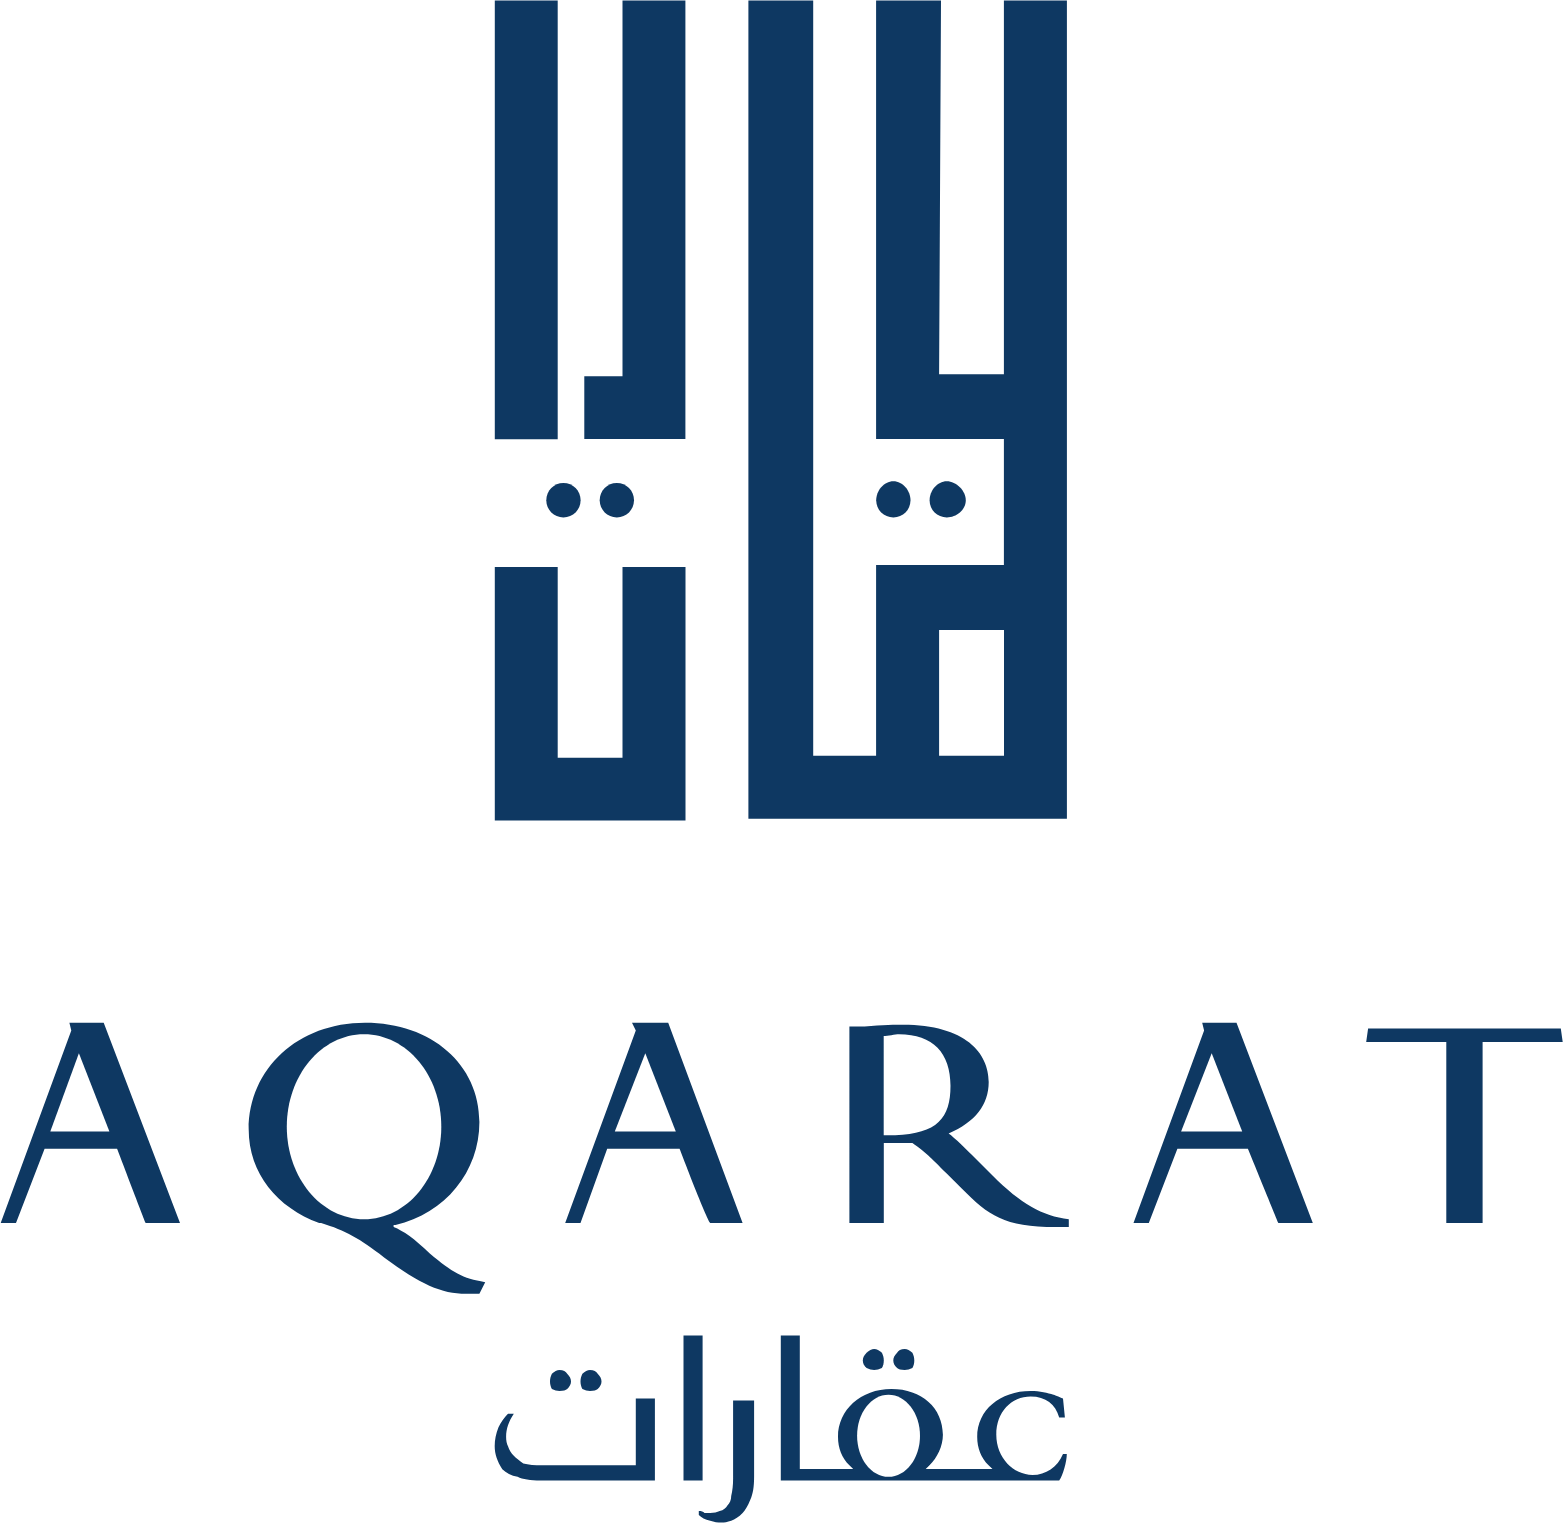 Kuwait Real Estate Company (AQARAT) logo large (transparent PNG)